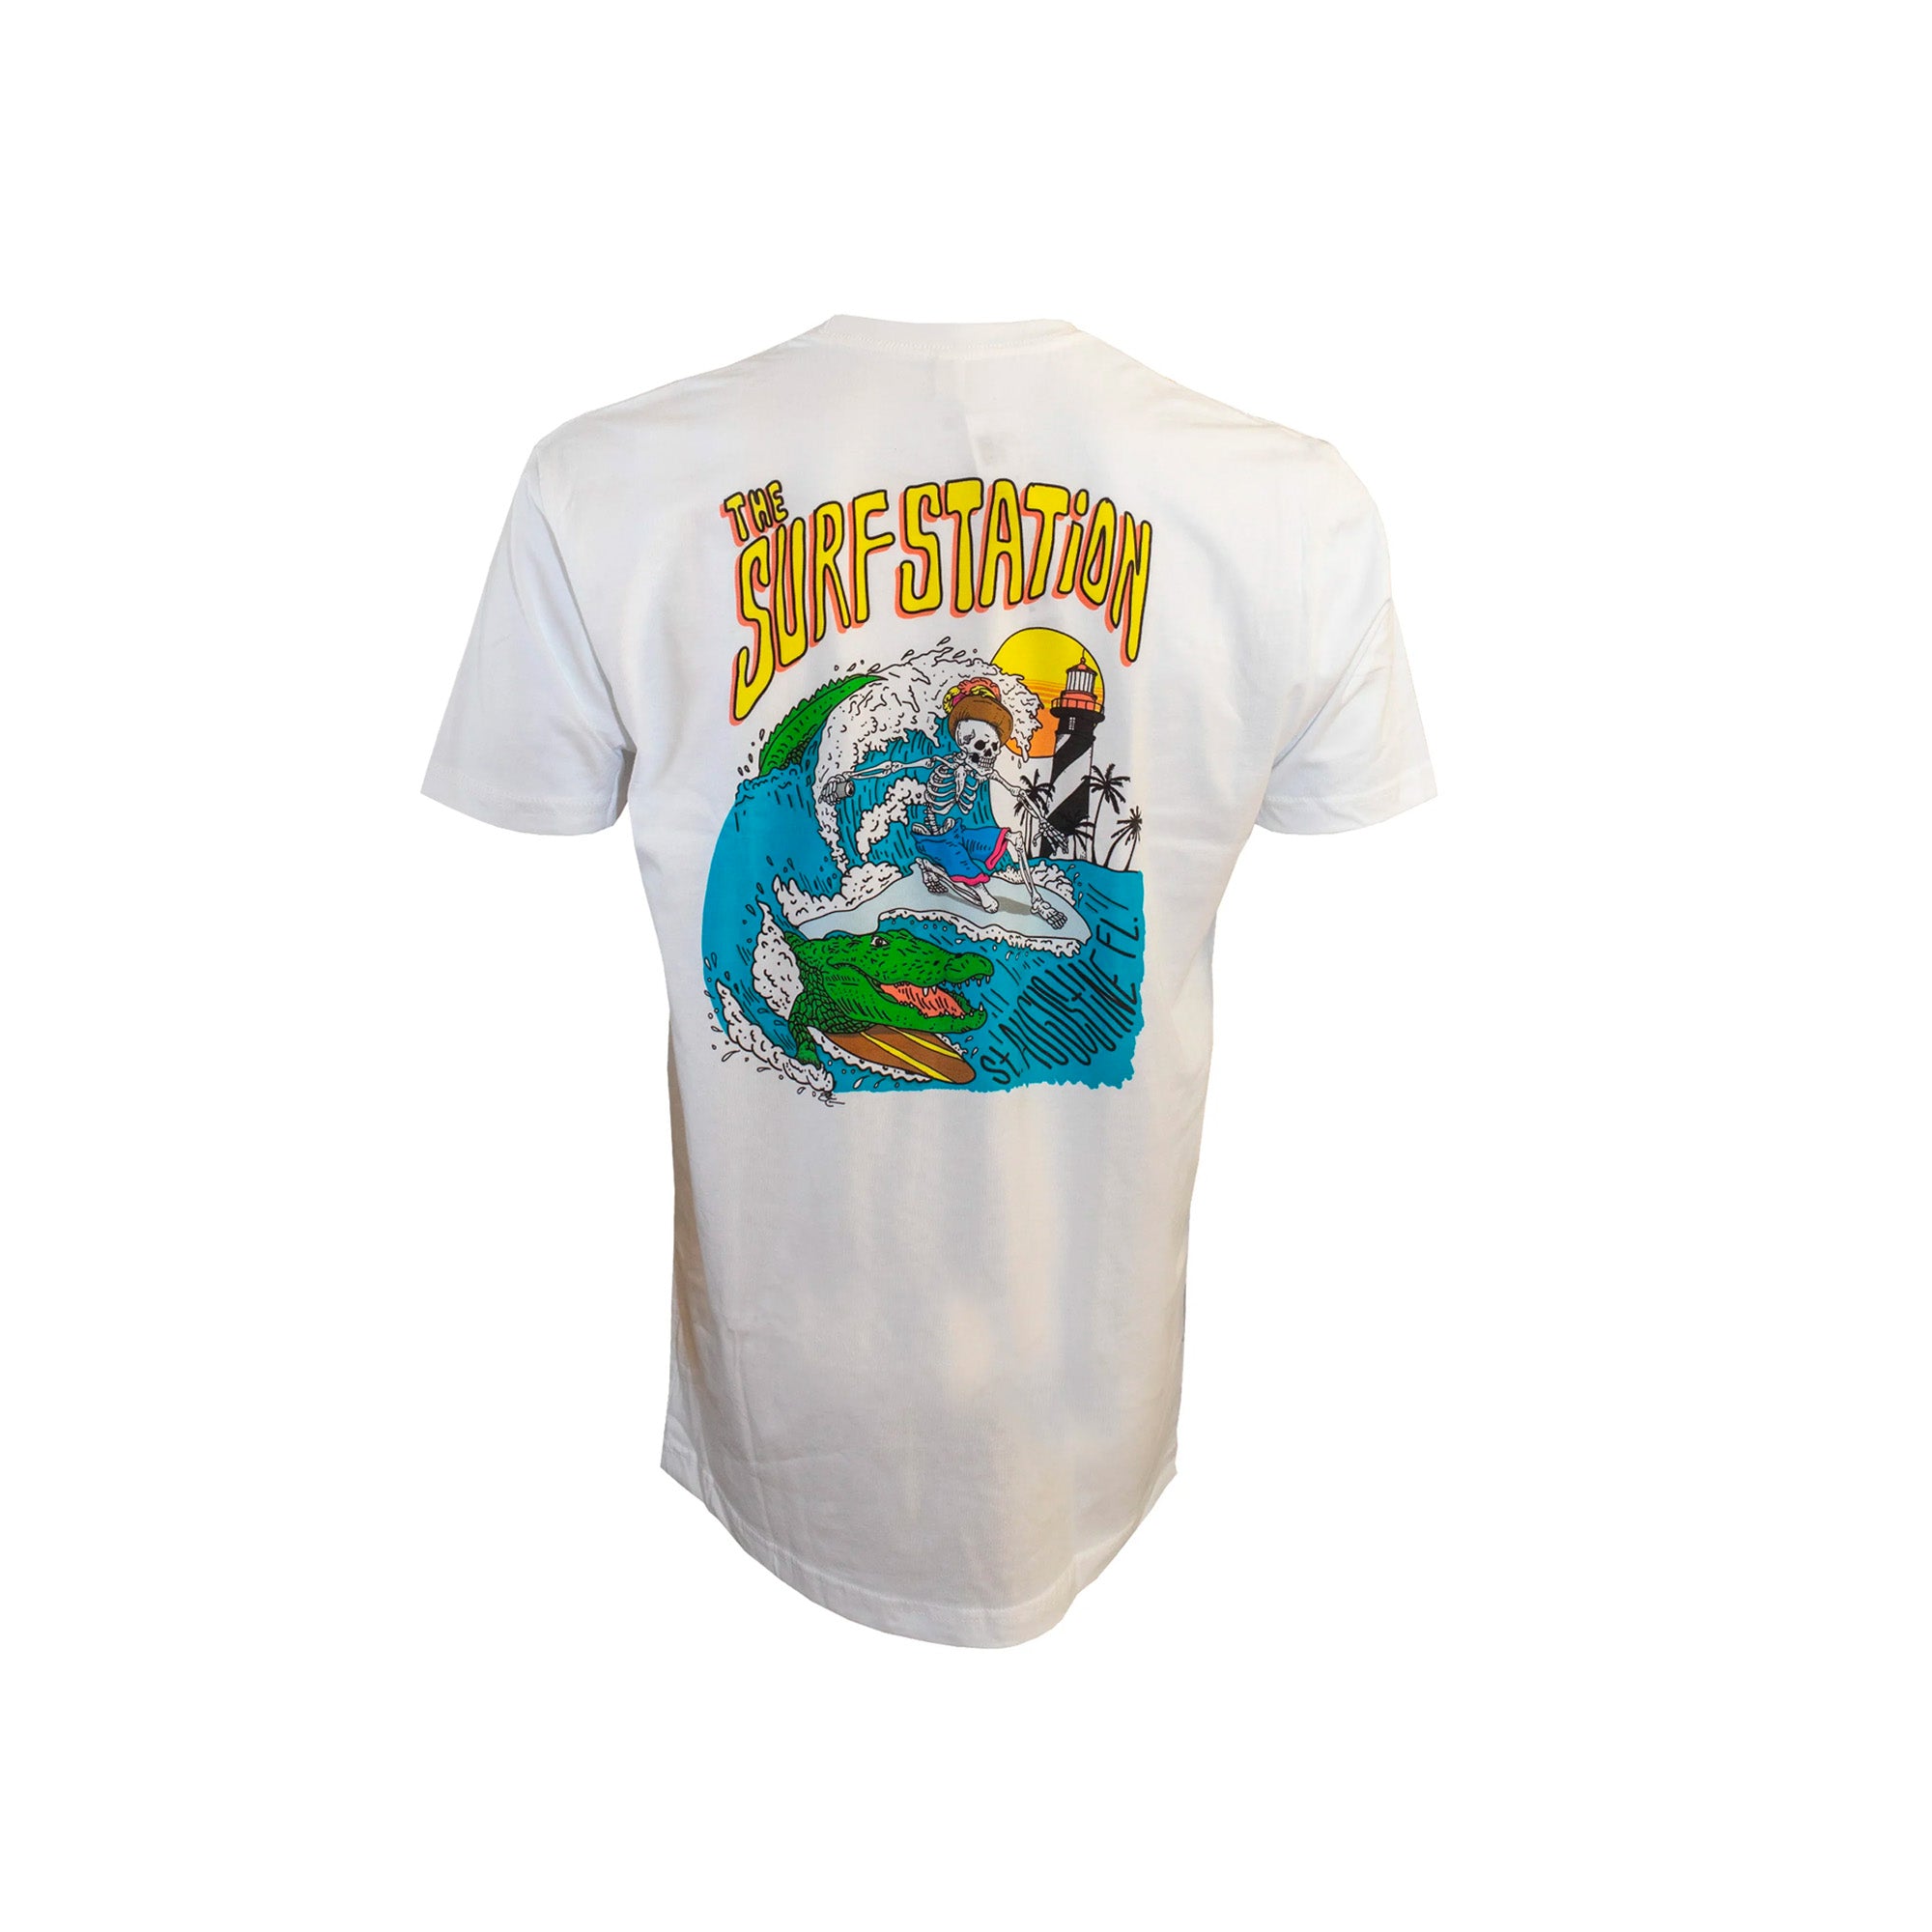 Surf Station Skeleton Gator Youth Boy's S/S T-Shirt